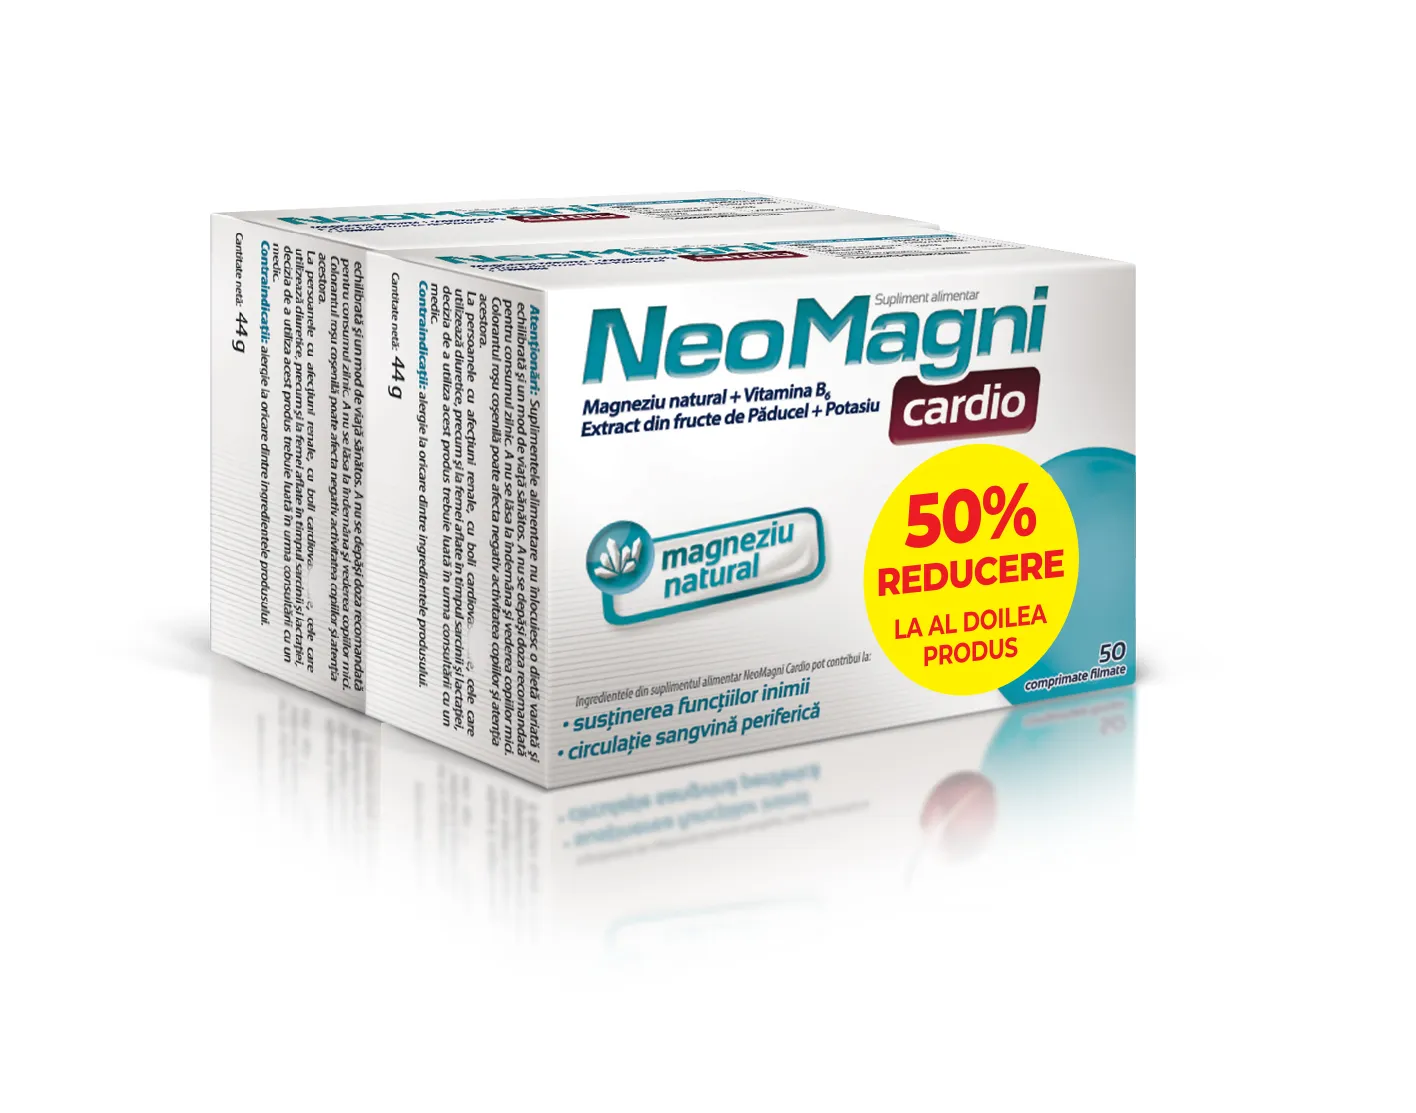 Pachet NeoMagni cardio, 50 comprimate + 50% reducere la al doilea produs, Aflofarm